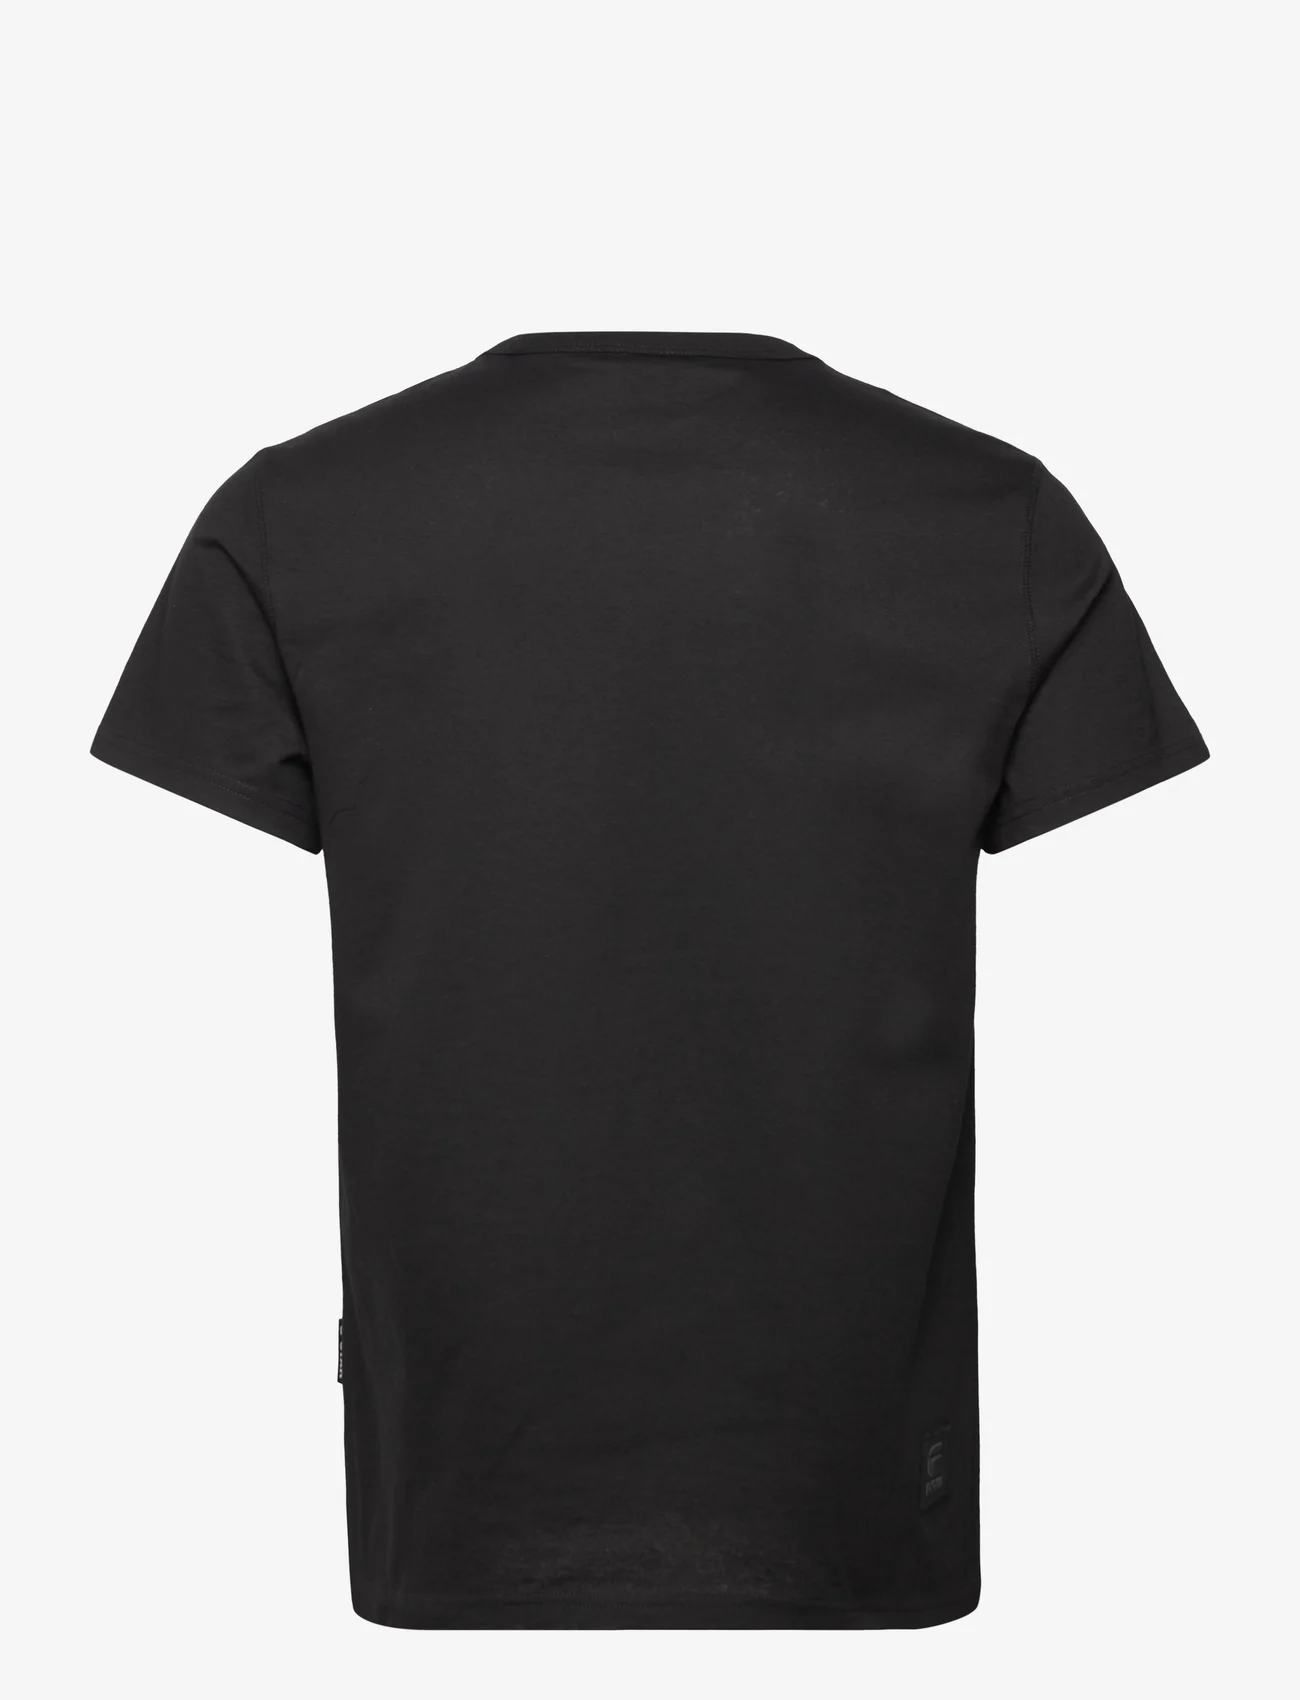 G-Star RAW - Premium base r t - kortærmede t-shirts - dk black - 1